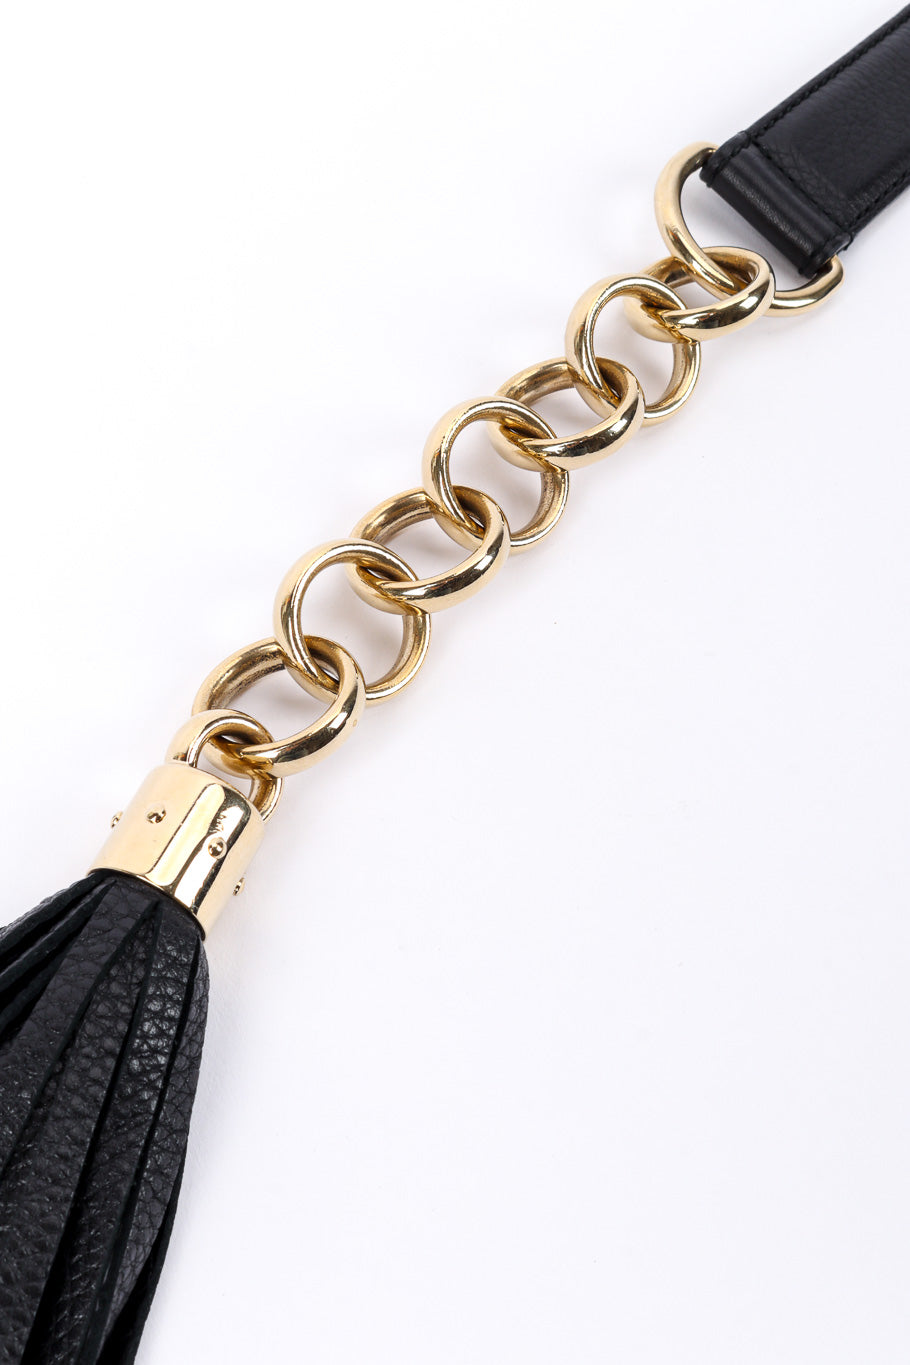 Gucci Horsebit Tassel Belt rolo chain @recessla